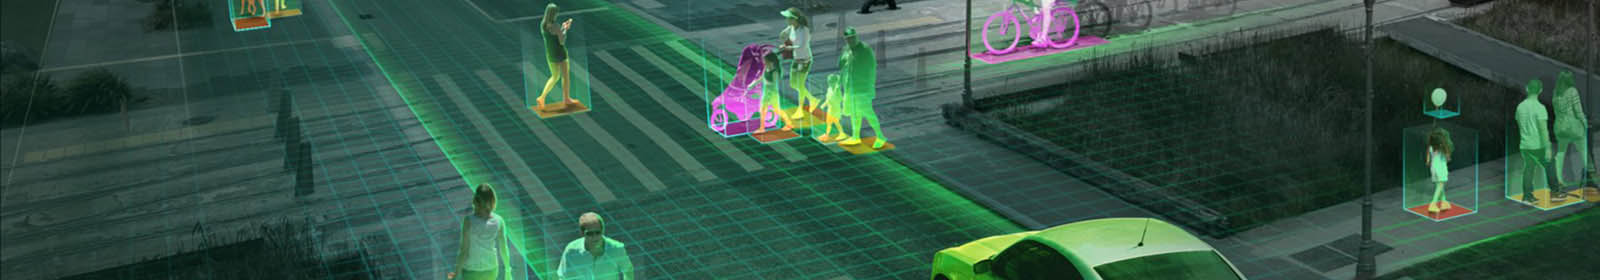 Digital city street with pedestrians